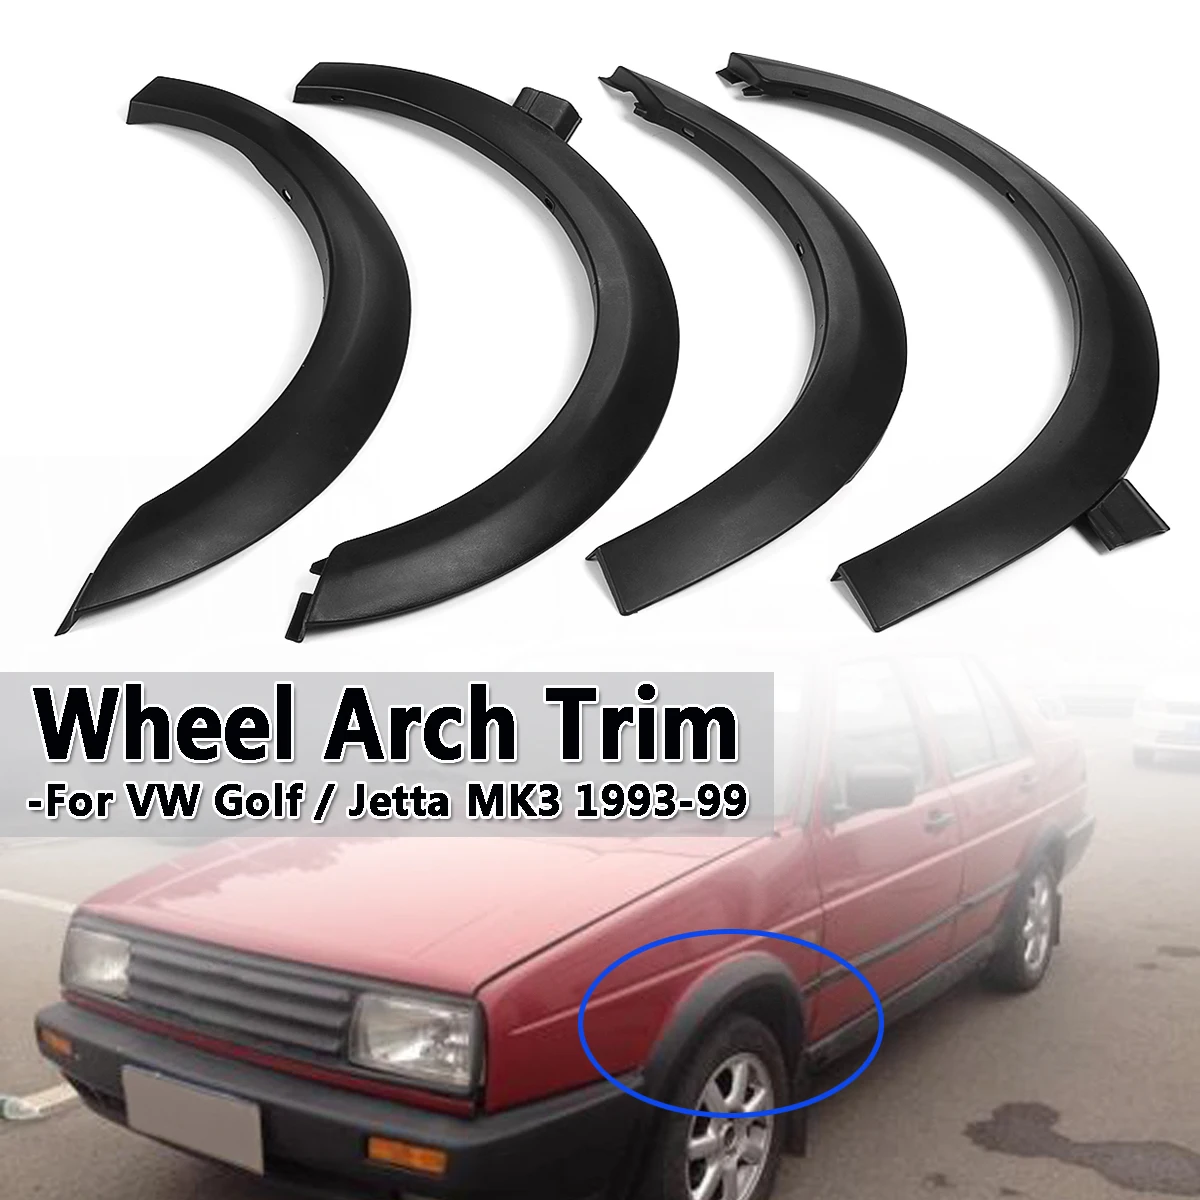 

4pcs Univeasal For Fender Flares For Car Wheel Arch Trim Mug Set For VW Golf For Jetta Cabrio MK3 ABS Plastic Mudguards Sticker